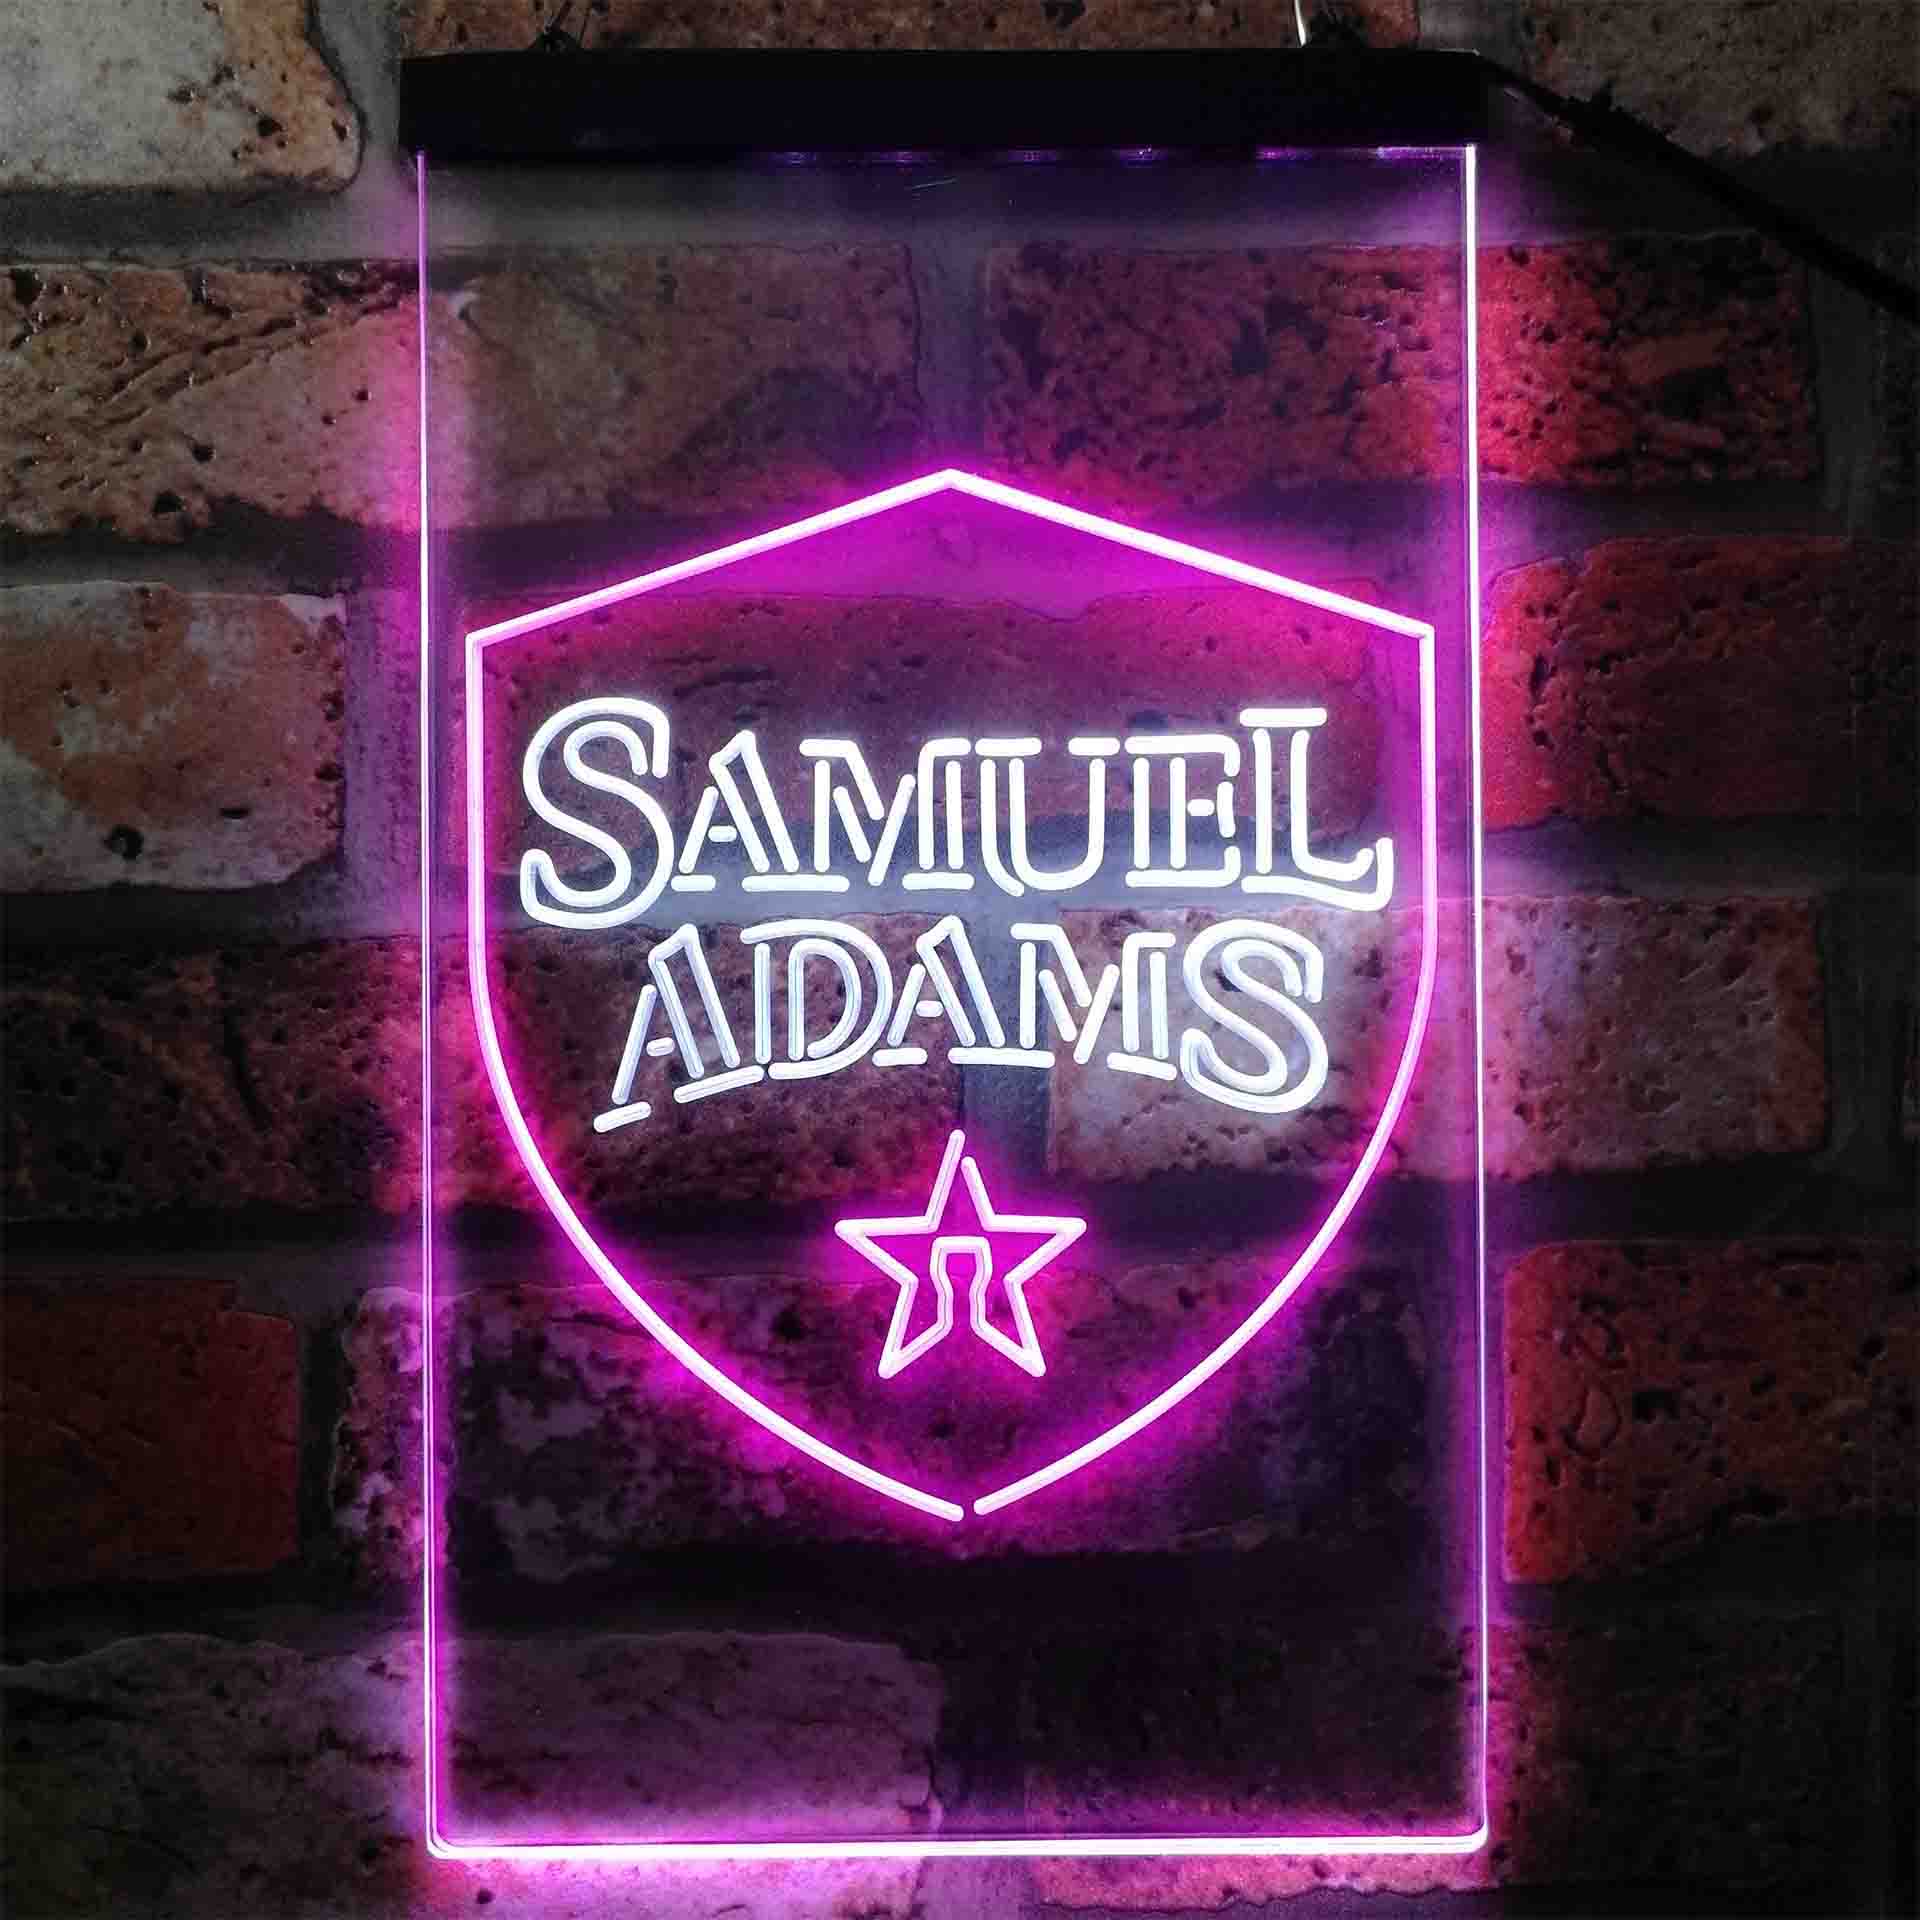 Samuel Adam Badge LED Neon Sign